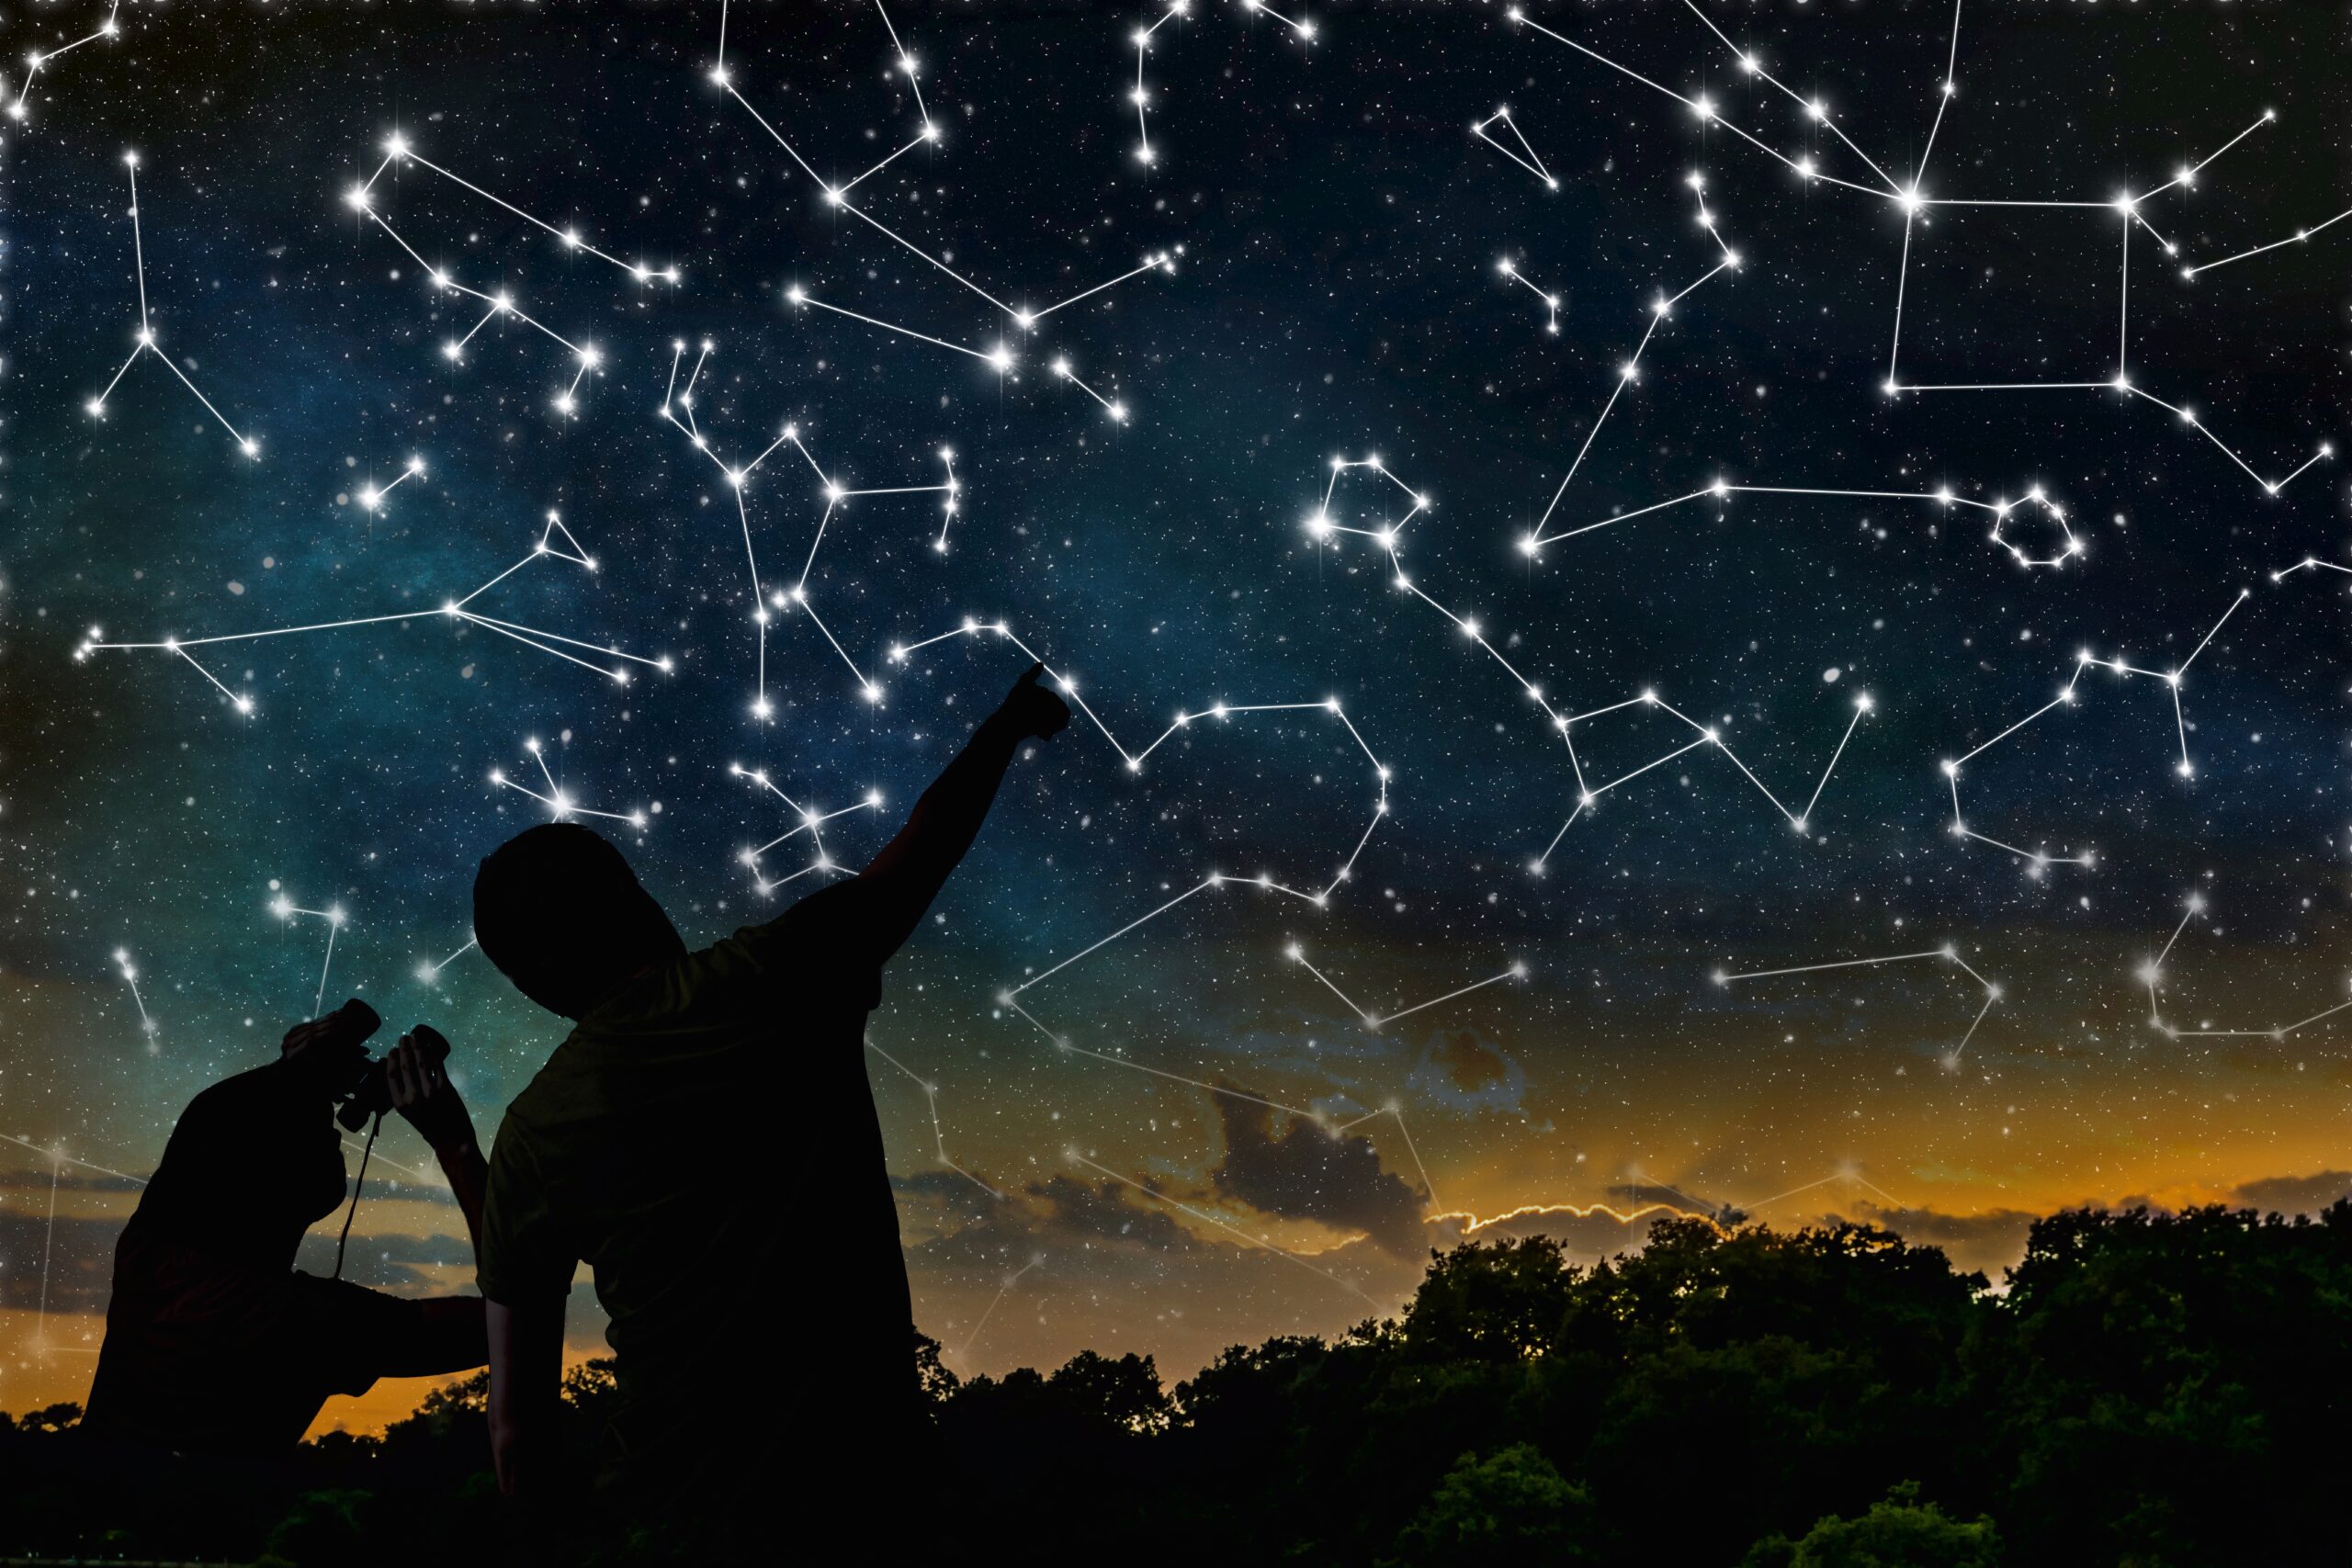 Древнее звездное небо. Созвездие Орион. Звезда с неба. Человек на фоне звездного неба. Звездное небо созвездия.